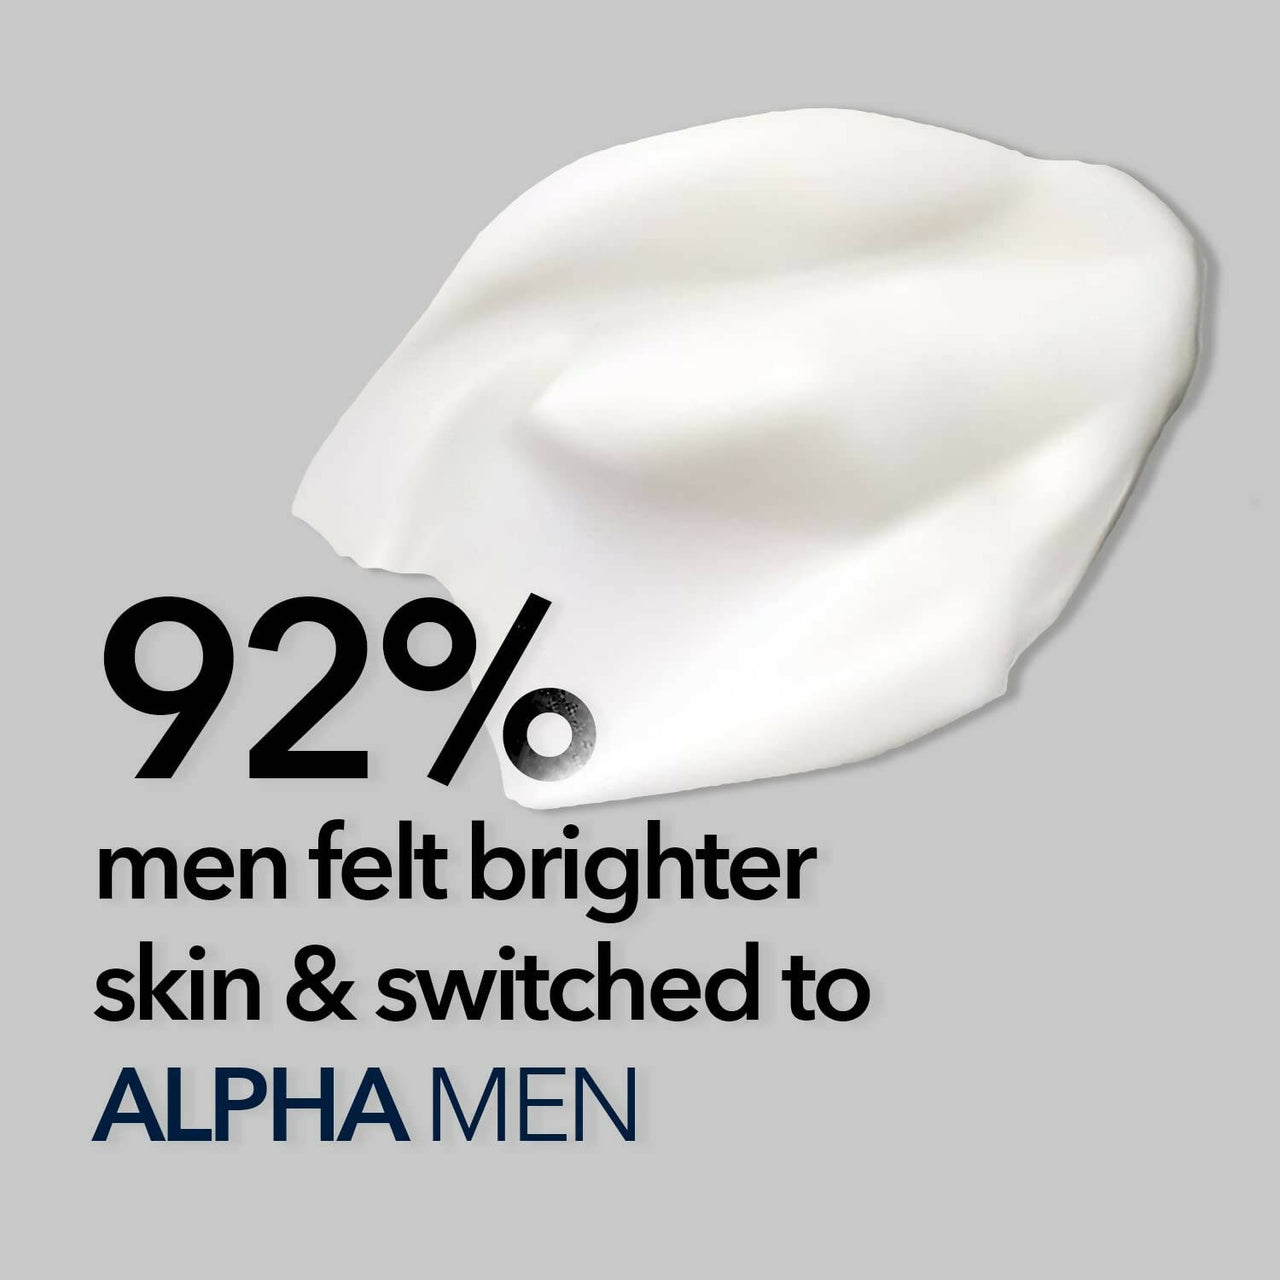 Professional O3+ Alpha Men Bright Glow Face Wash - Distacart